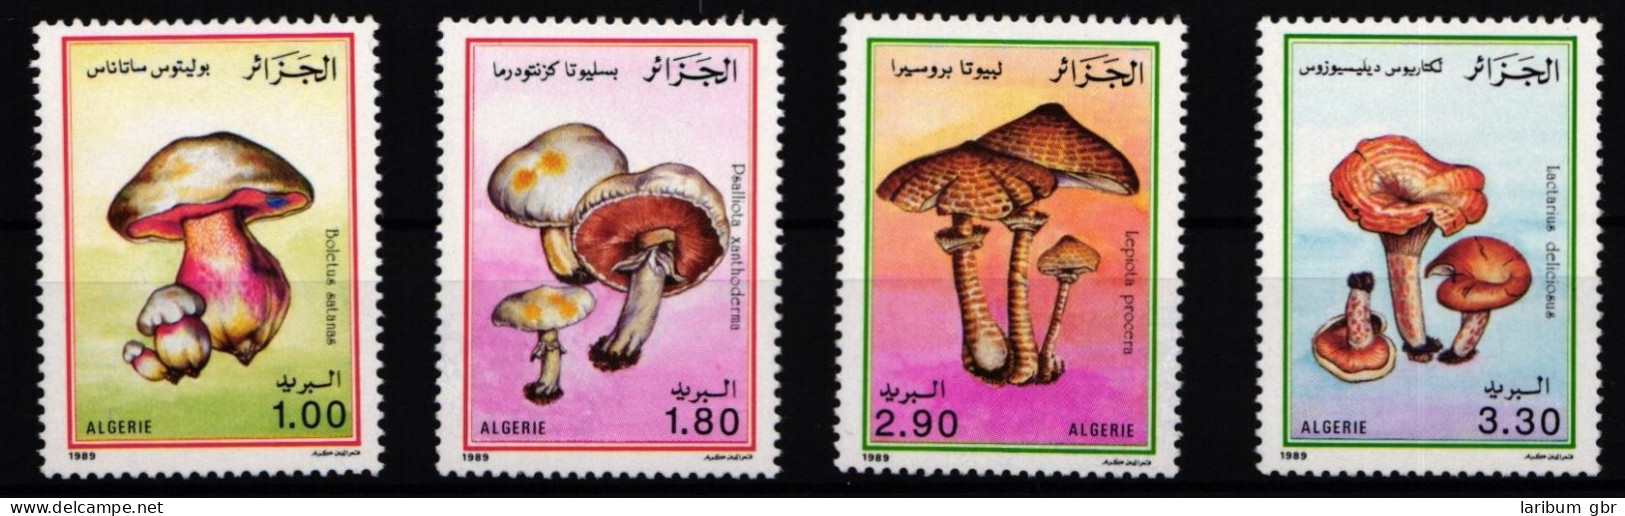 Algerien 1010-1013 Postfrisch Pilze #JA185 - Algerien (1962-...)